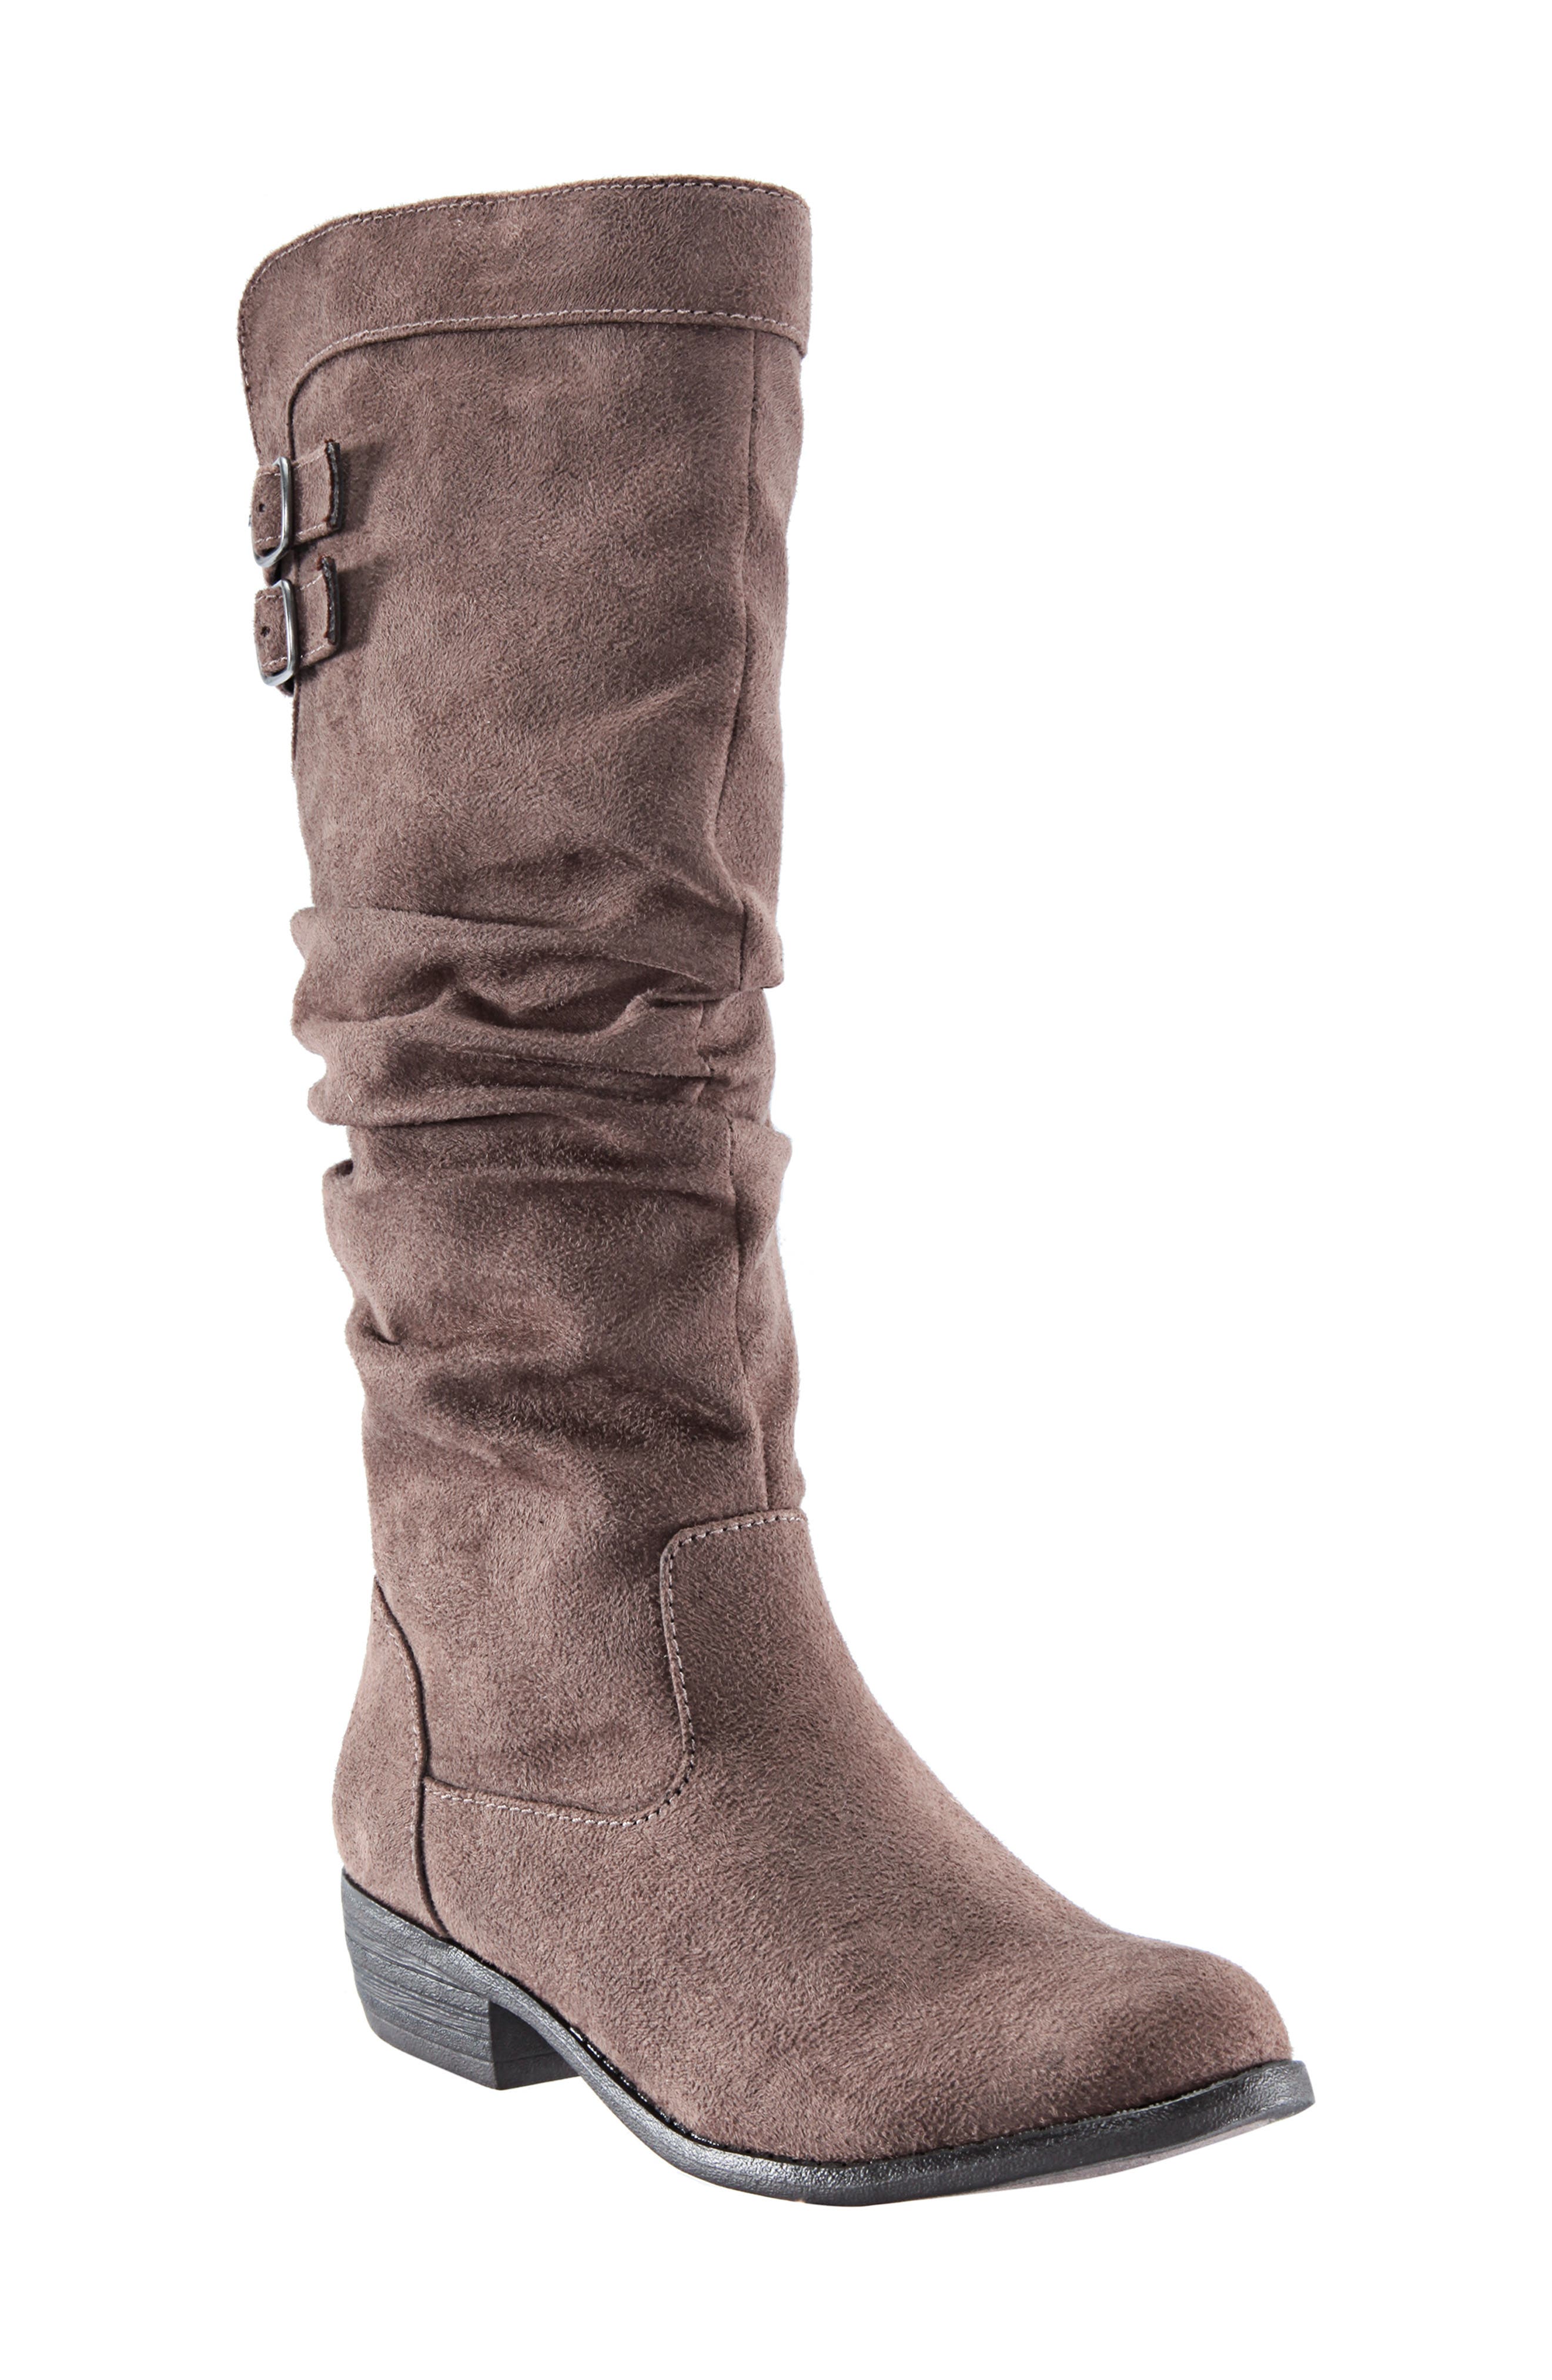 UPC 794378361589 product image for Girl's Nina Gilda Tall Slouchy Boot, Size 2 M - Beige | upcitemdb.com